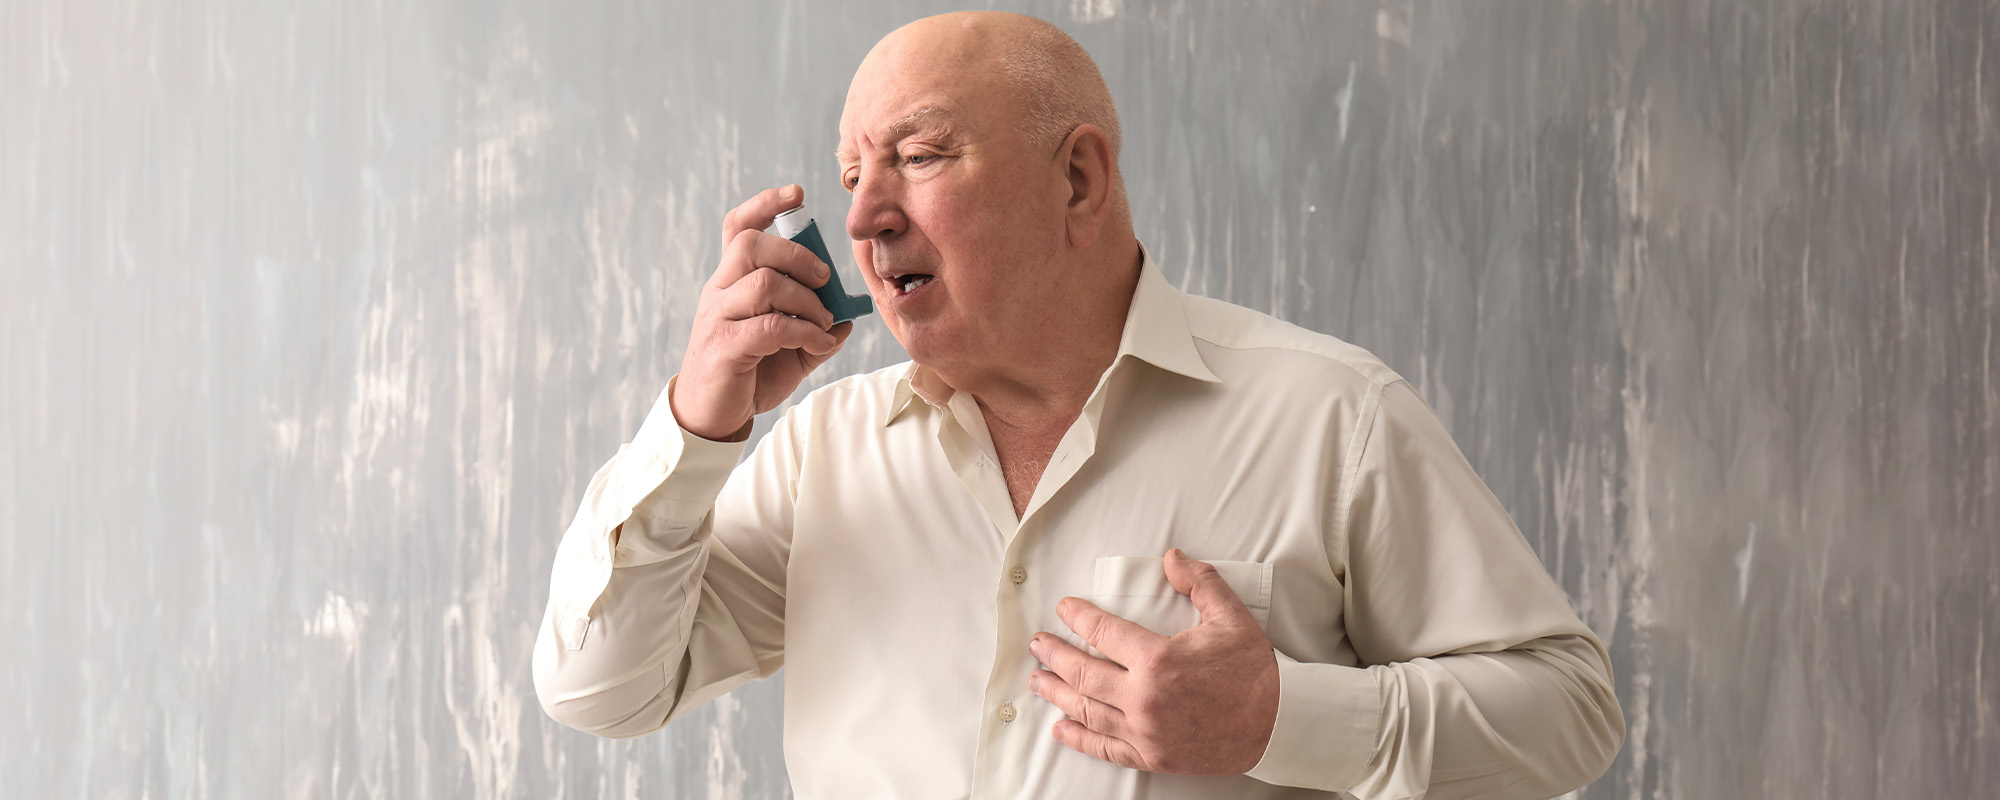 senior man with inhaler having asthma attack on grey background